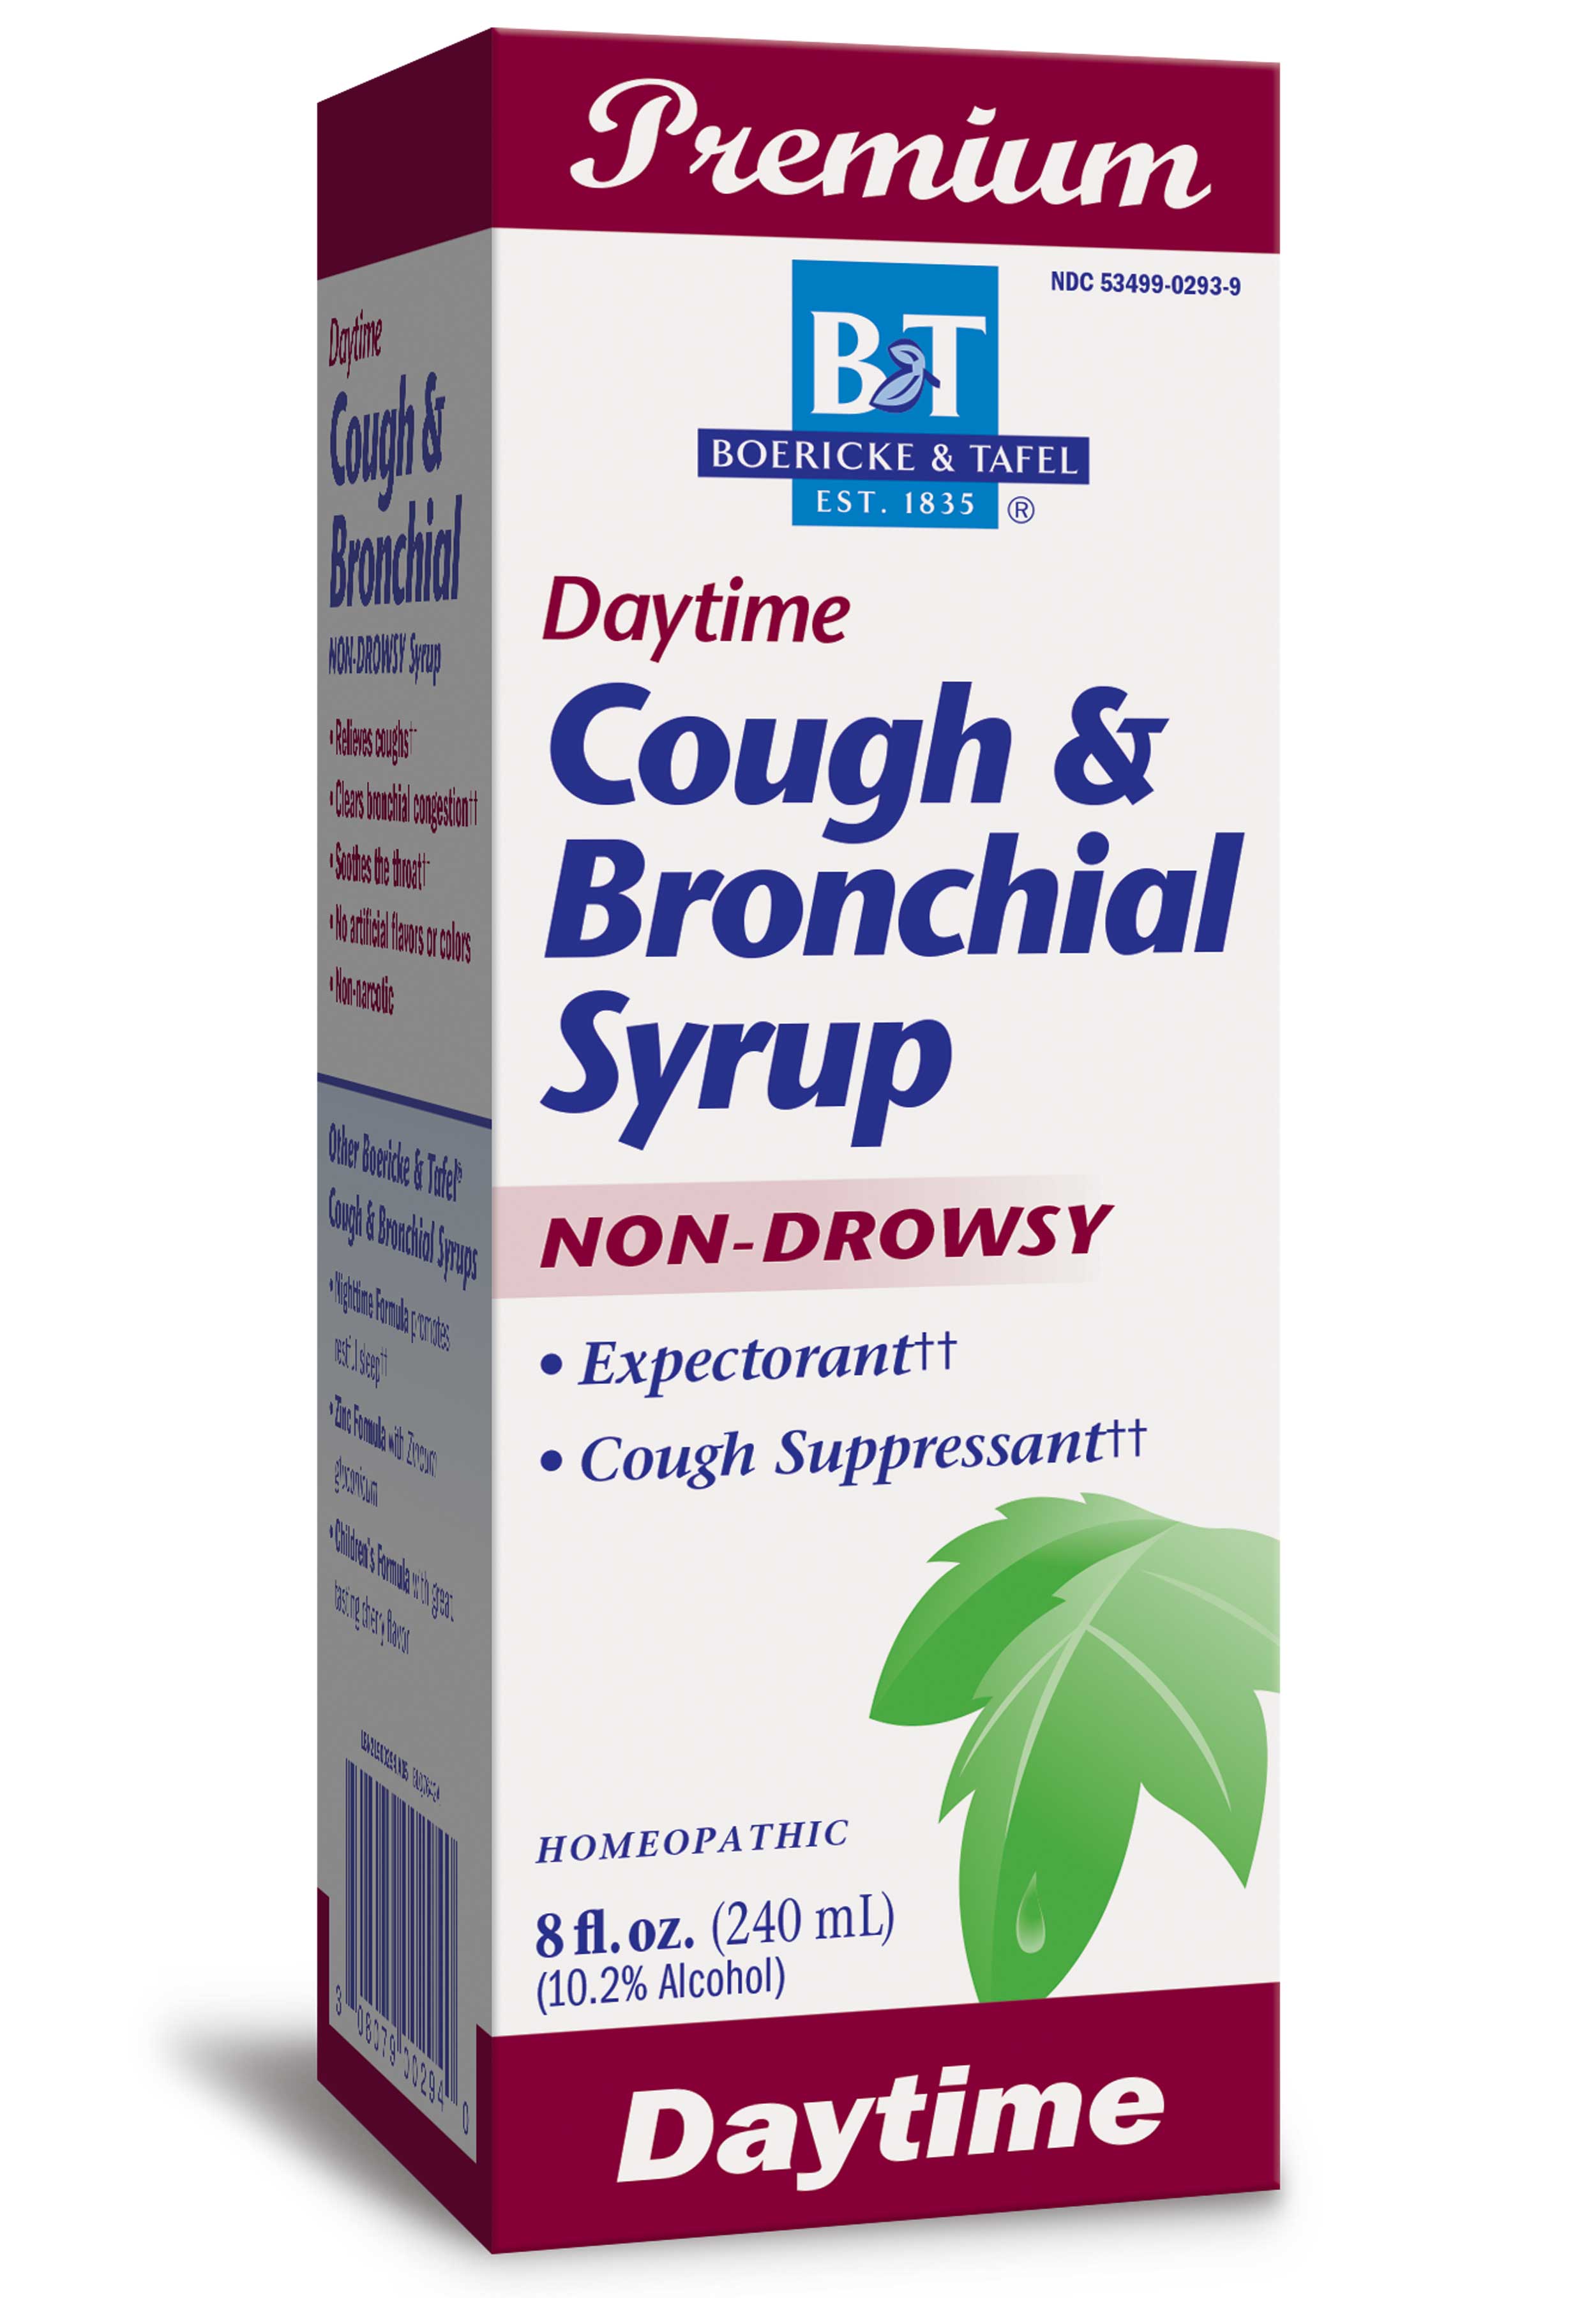 Boericke & Tafel Cough & Bronchial Daytime Syrup